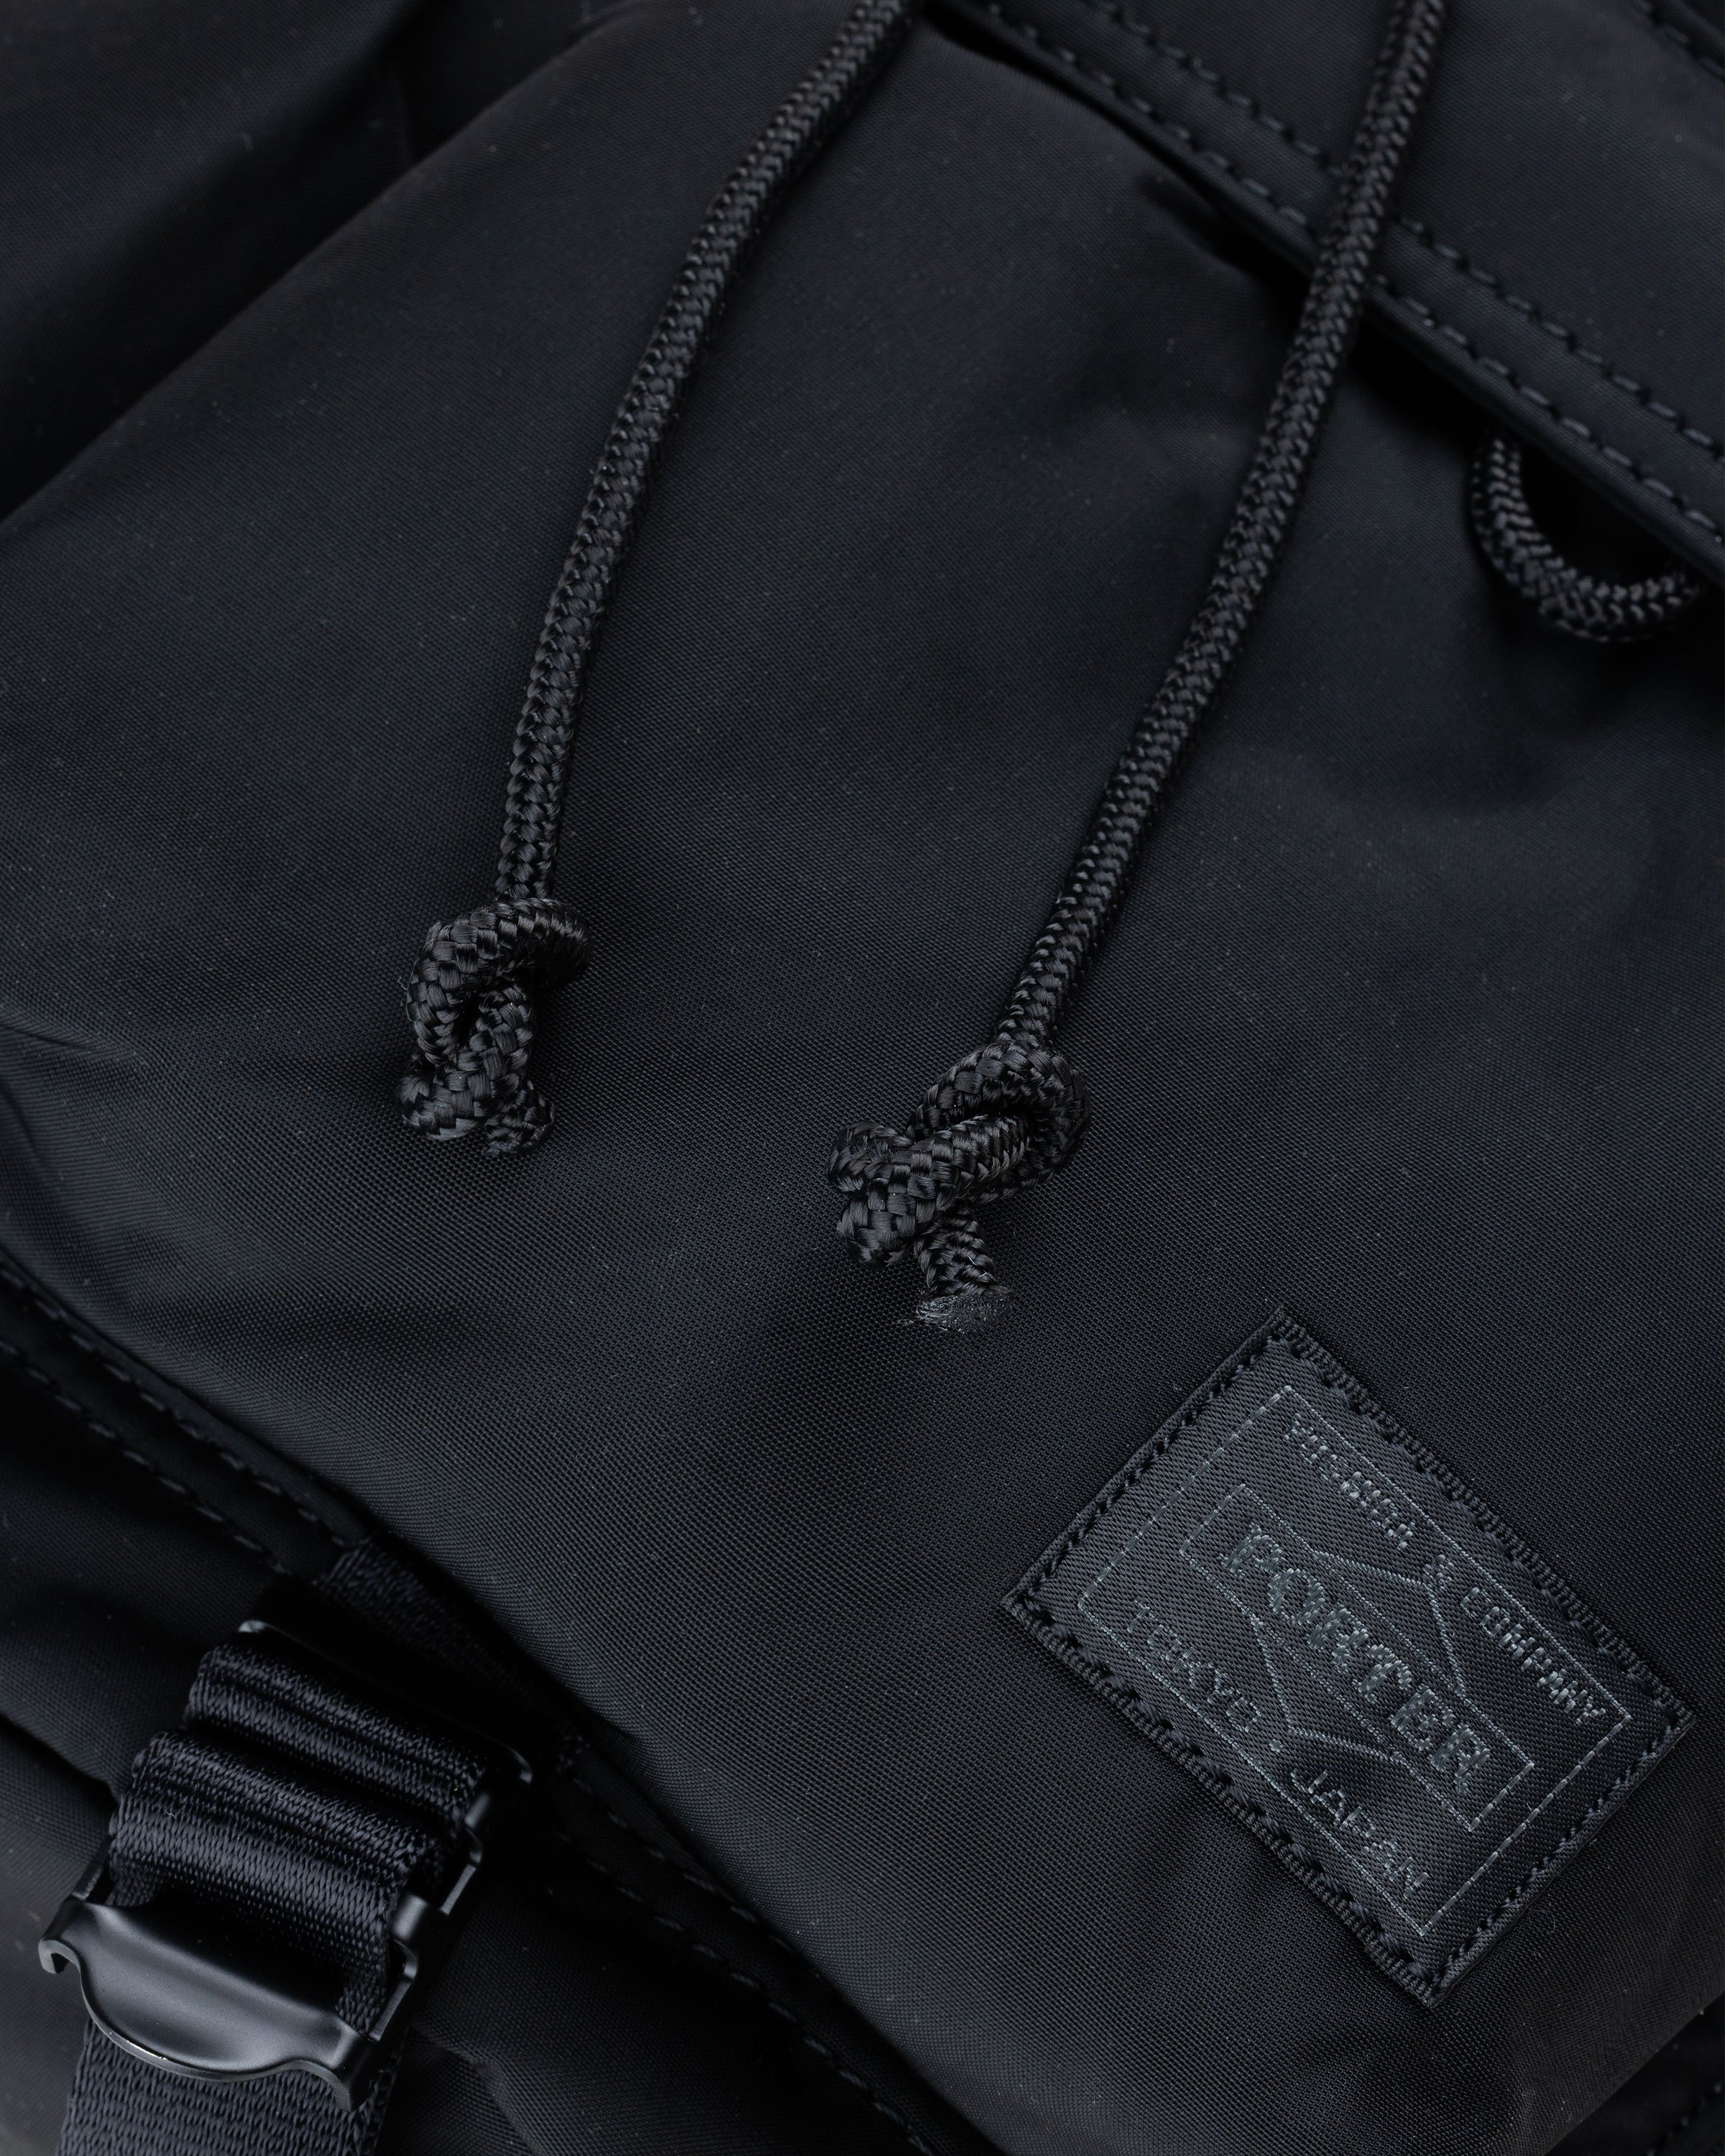 Porter-Yoshida & Co. - SENSES TOOL BAG - Accessories - Black - Image 5